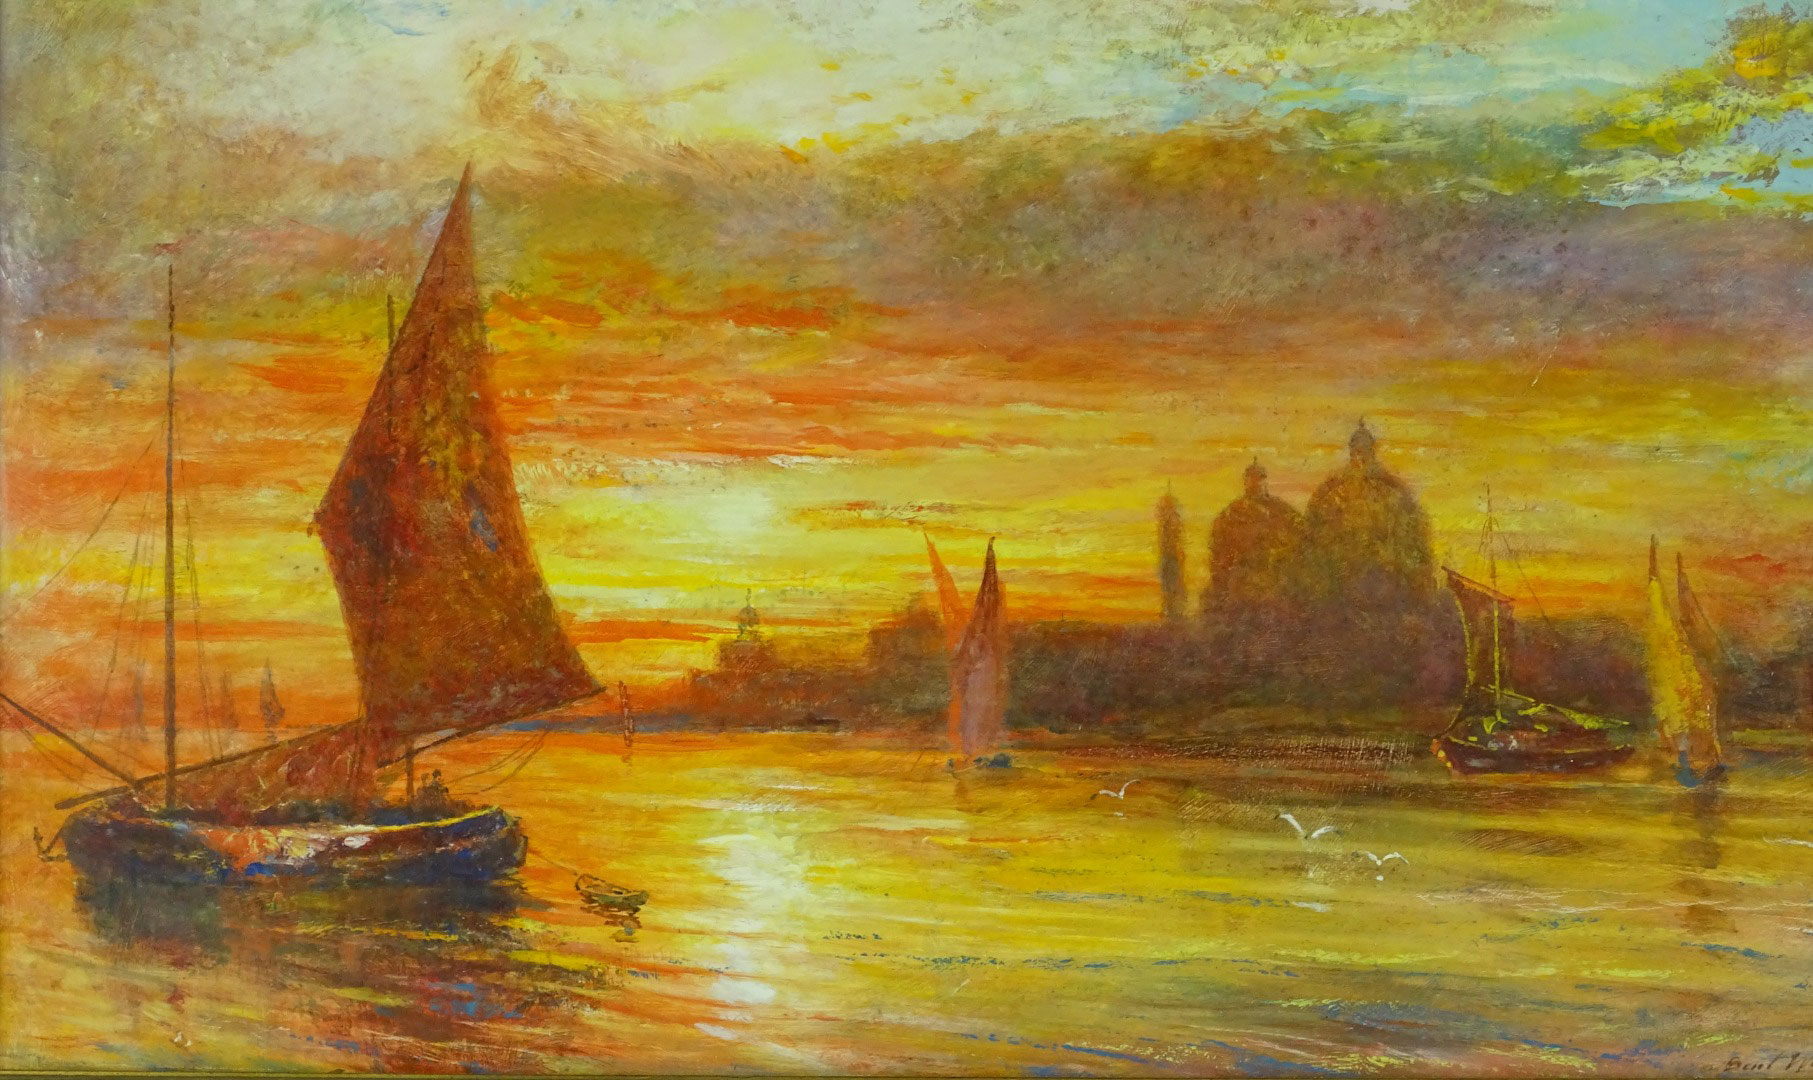 Venice scene sunset - no frame